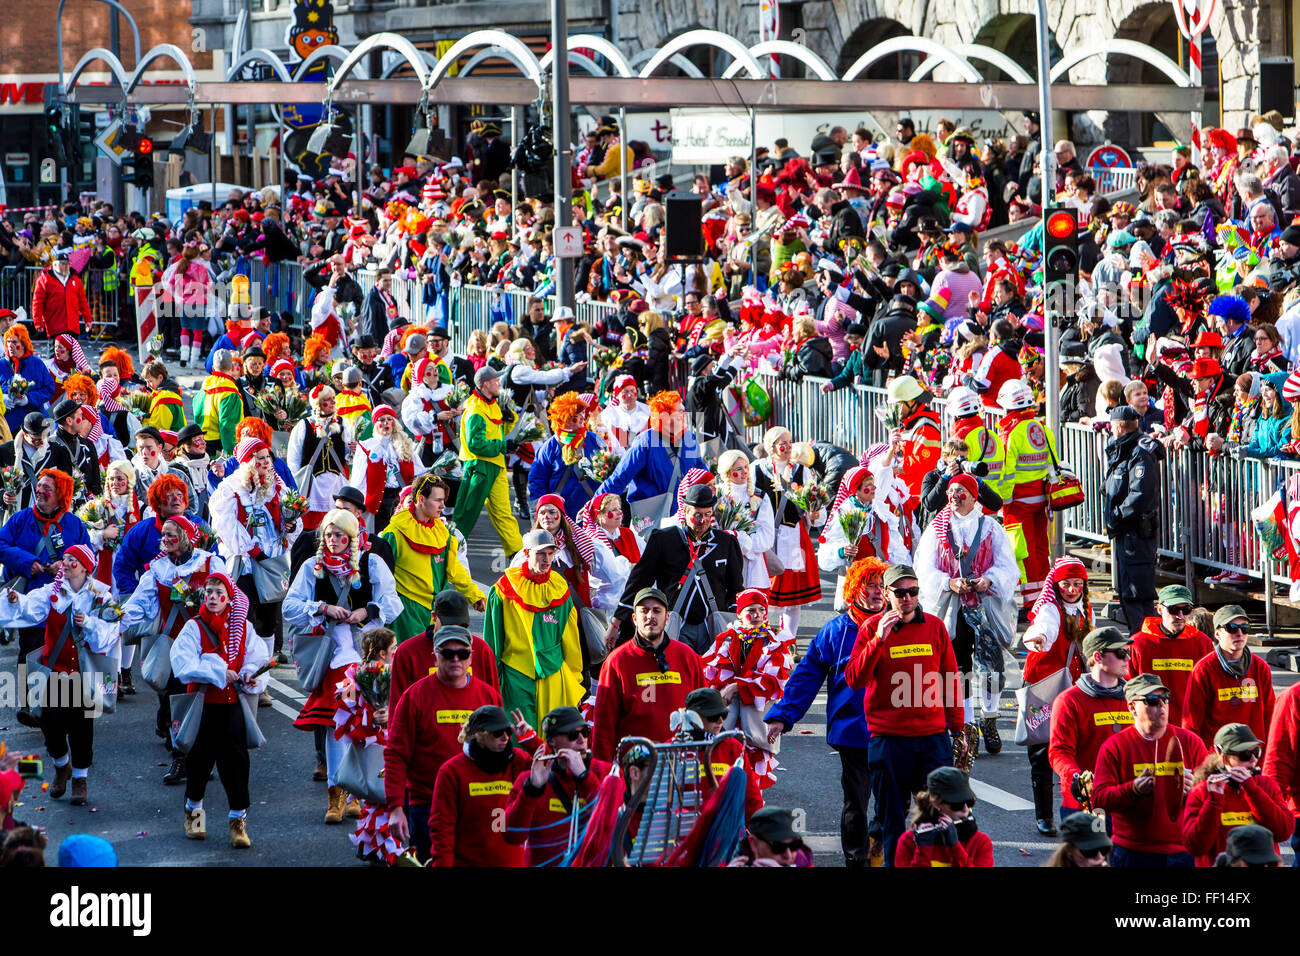 Street sfilata di carnevale e festa in Colonia, Germania in occasione del Carnevale di Lunedì, Martedì Grasso Lunedì, Rose Lunedì, persone in costumi, Foto Stock